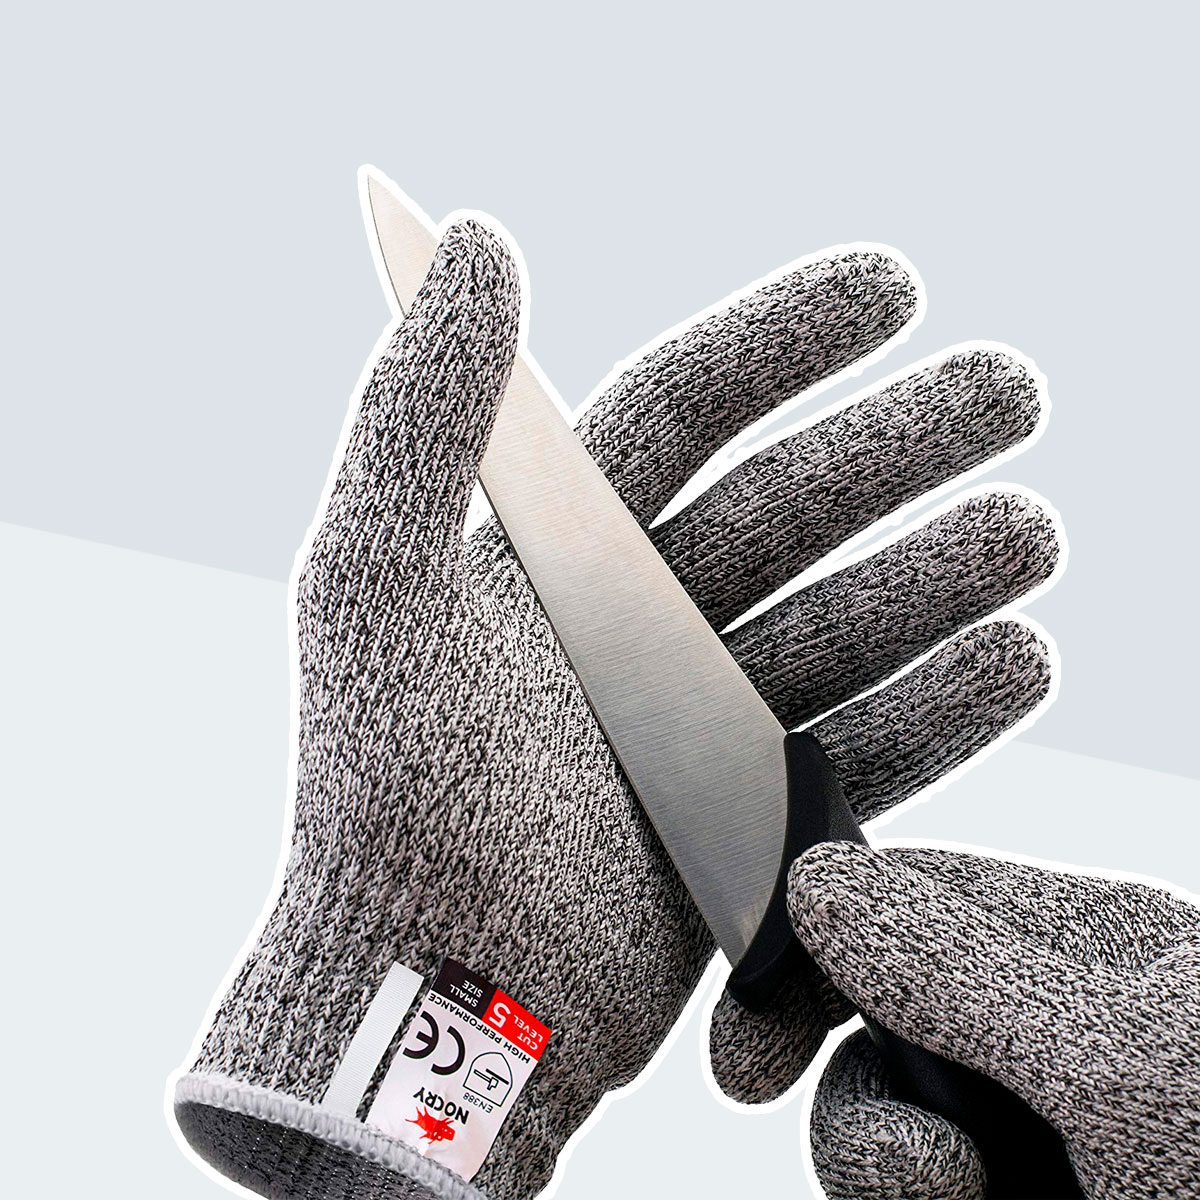 NoCry Cut-Resistant Gloves